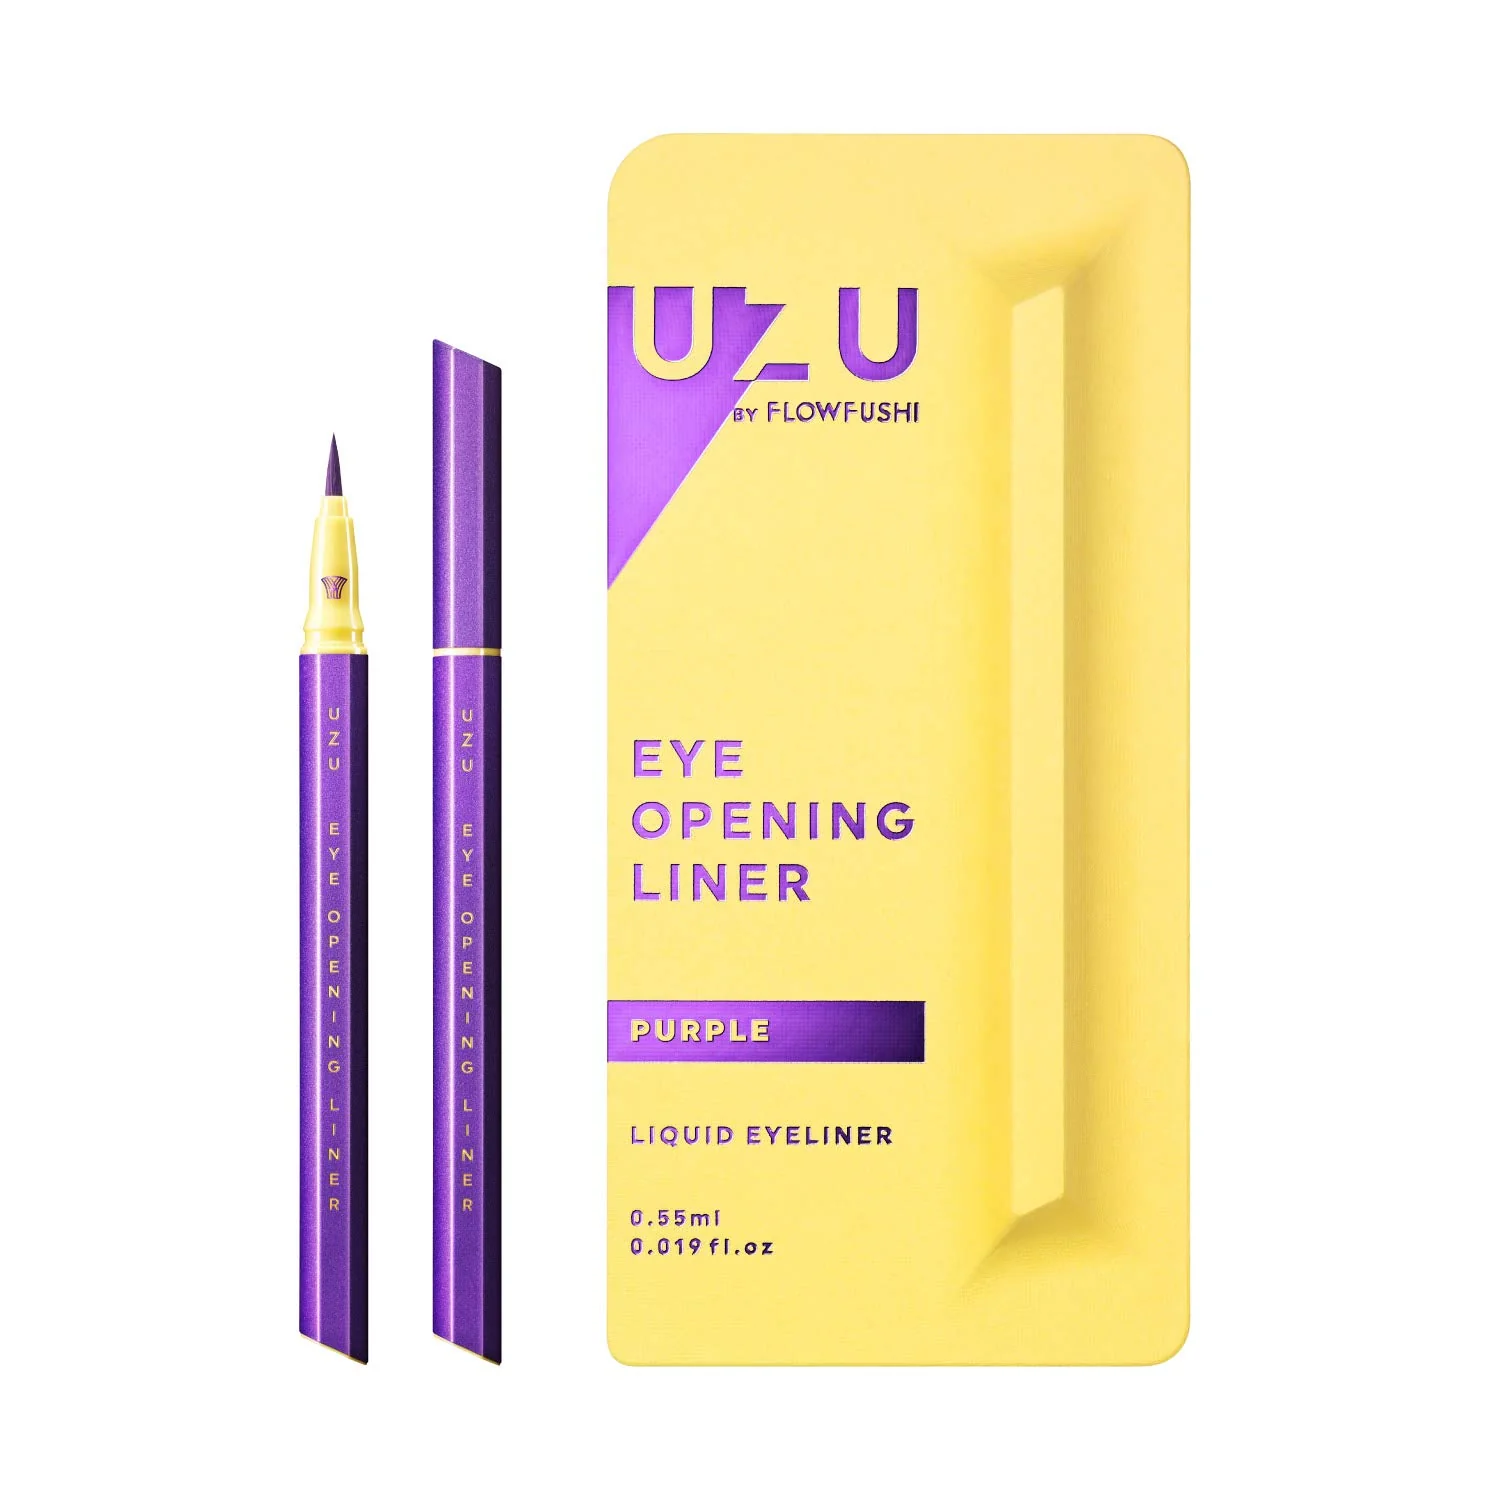 UZU By FLOWFUSHI Eye Opening Liner Liquid Eyeliner (Purple) 0.55ml